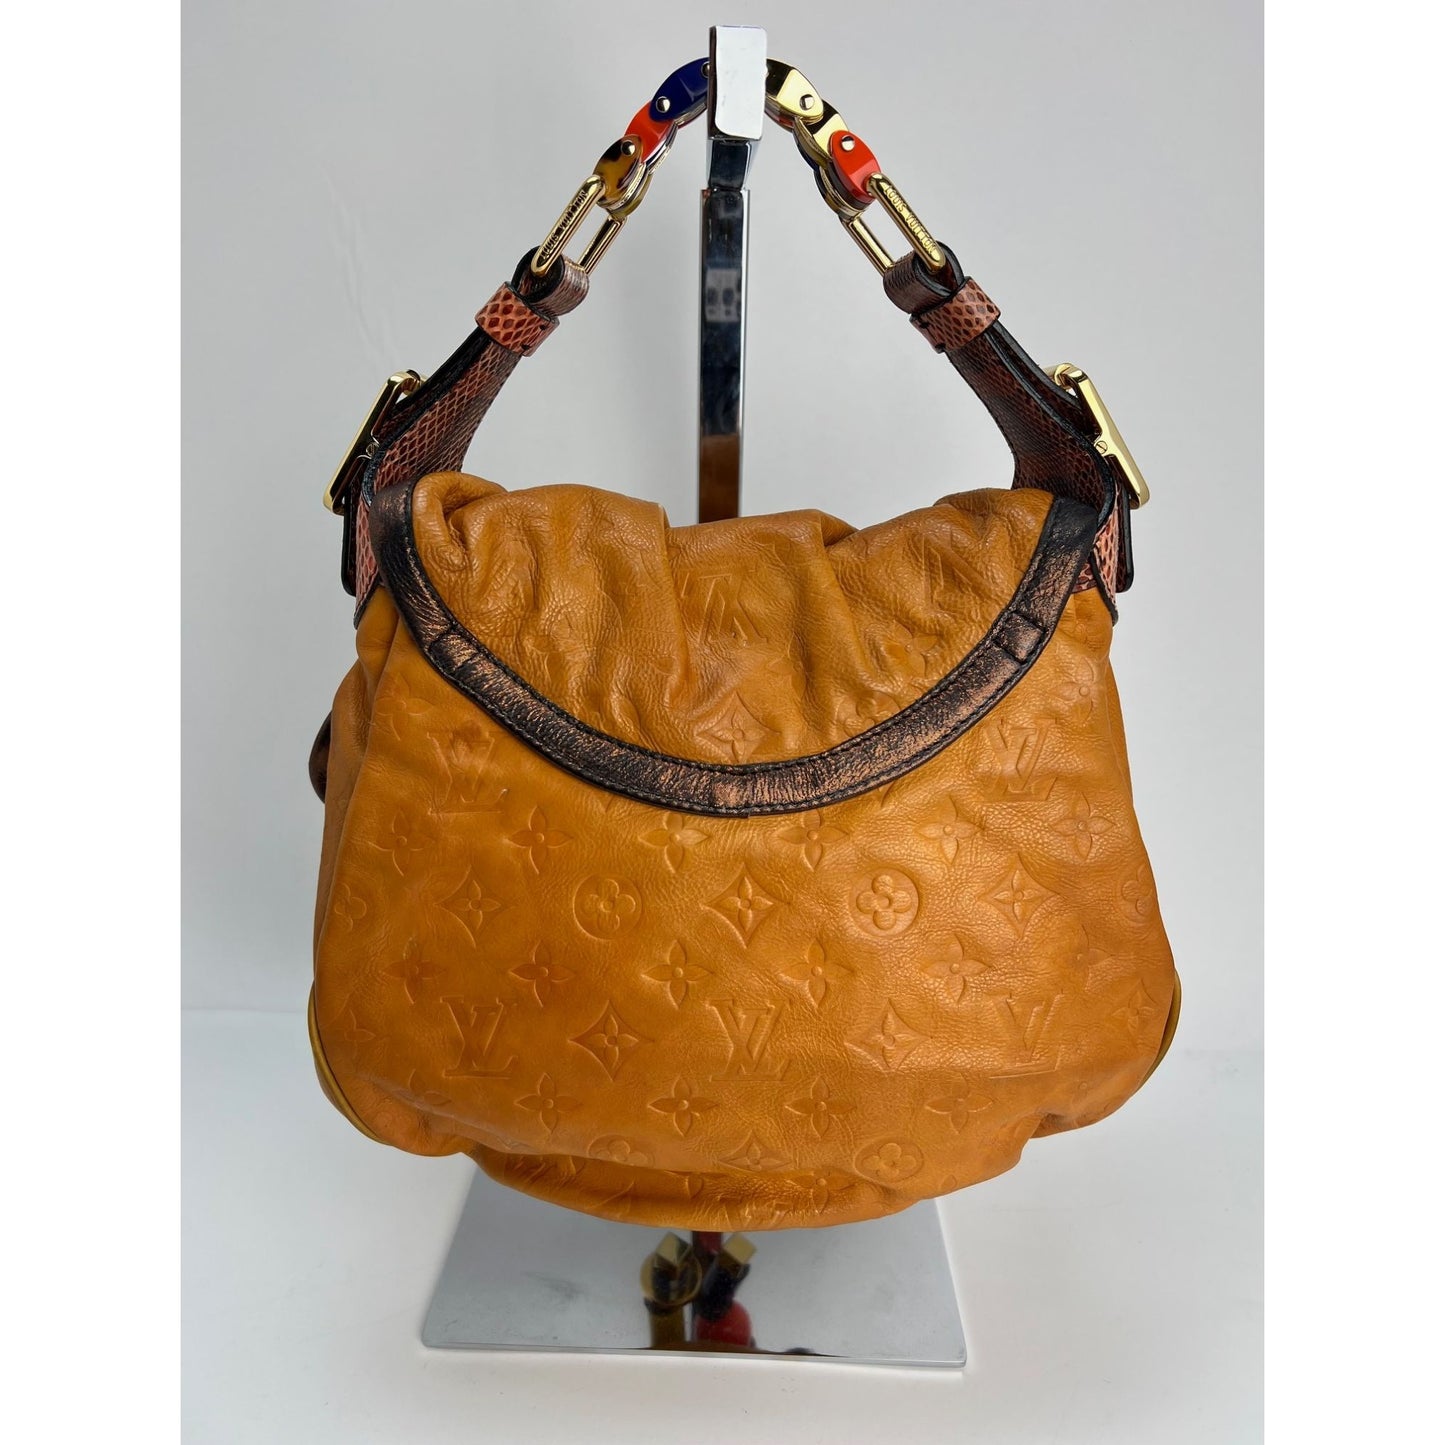 LOUIS VUITTON Kalahari Pm Bag BRAND NEW! Limited Edition Gorgeous